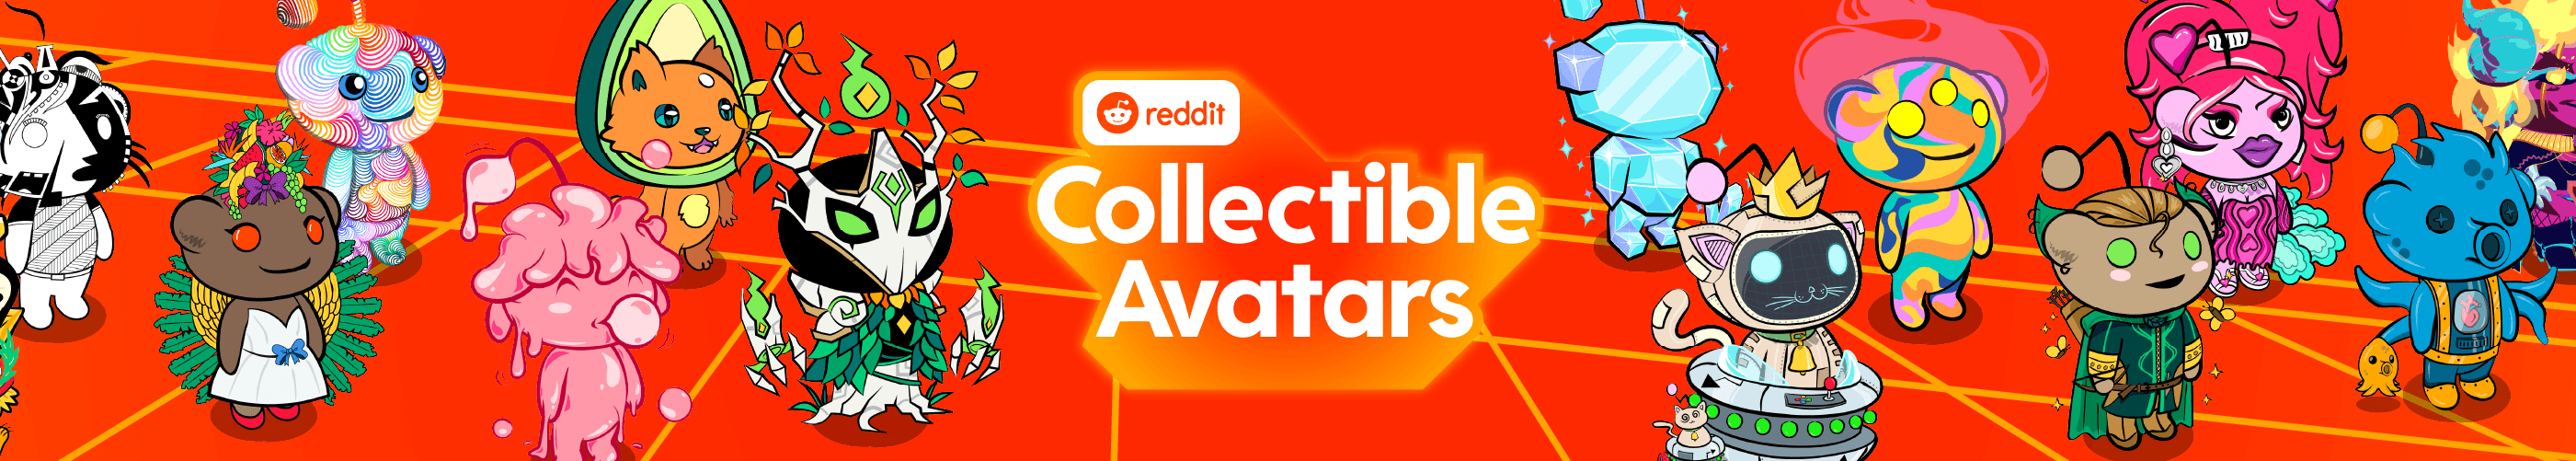 Reddit Collectible Avatars